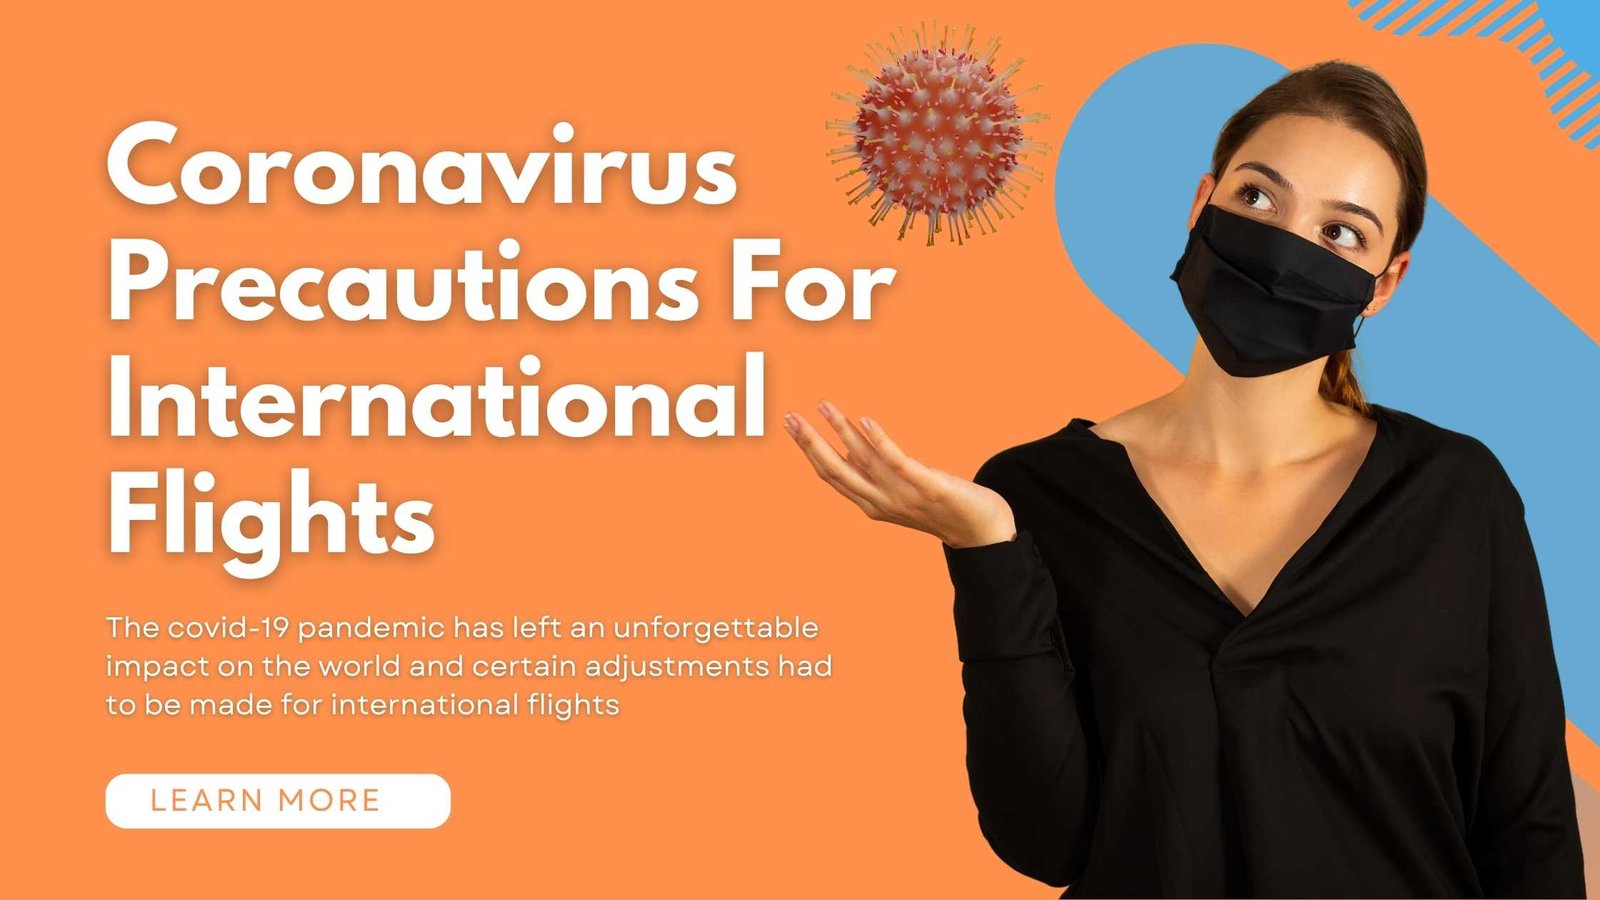 Coronavirus precautions for international flights